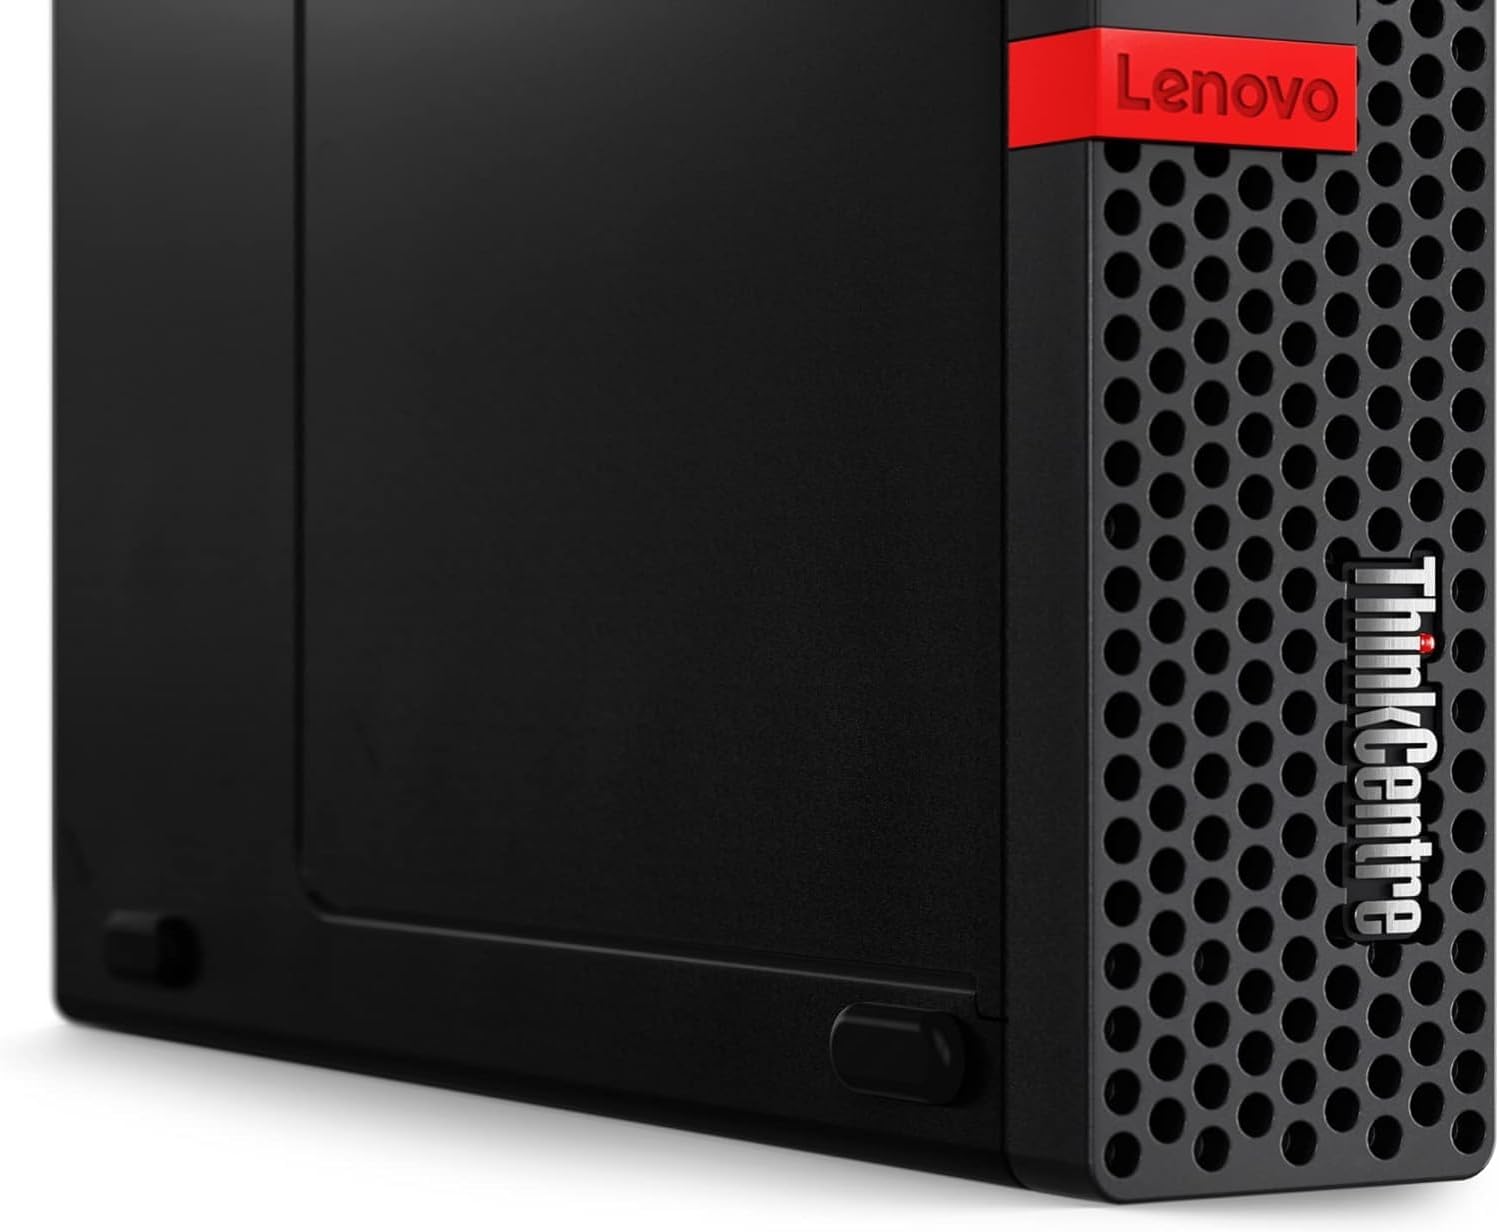 Lenovo ThinkCentre M625 Mini Desktop PC Black (AMD A4-9120c, 8GB RAM, 128GB SSD, AMD Radeon, AC WiFi, Bluetooth 5.1, 6 USB Ports, 2 Display Port (DP), RJ-45, No OS) with DKZ Hub